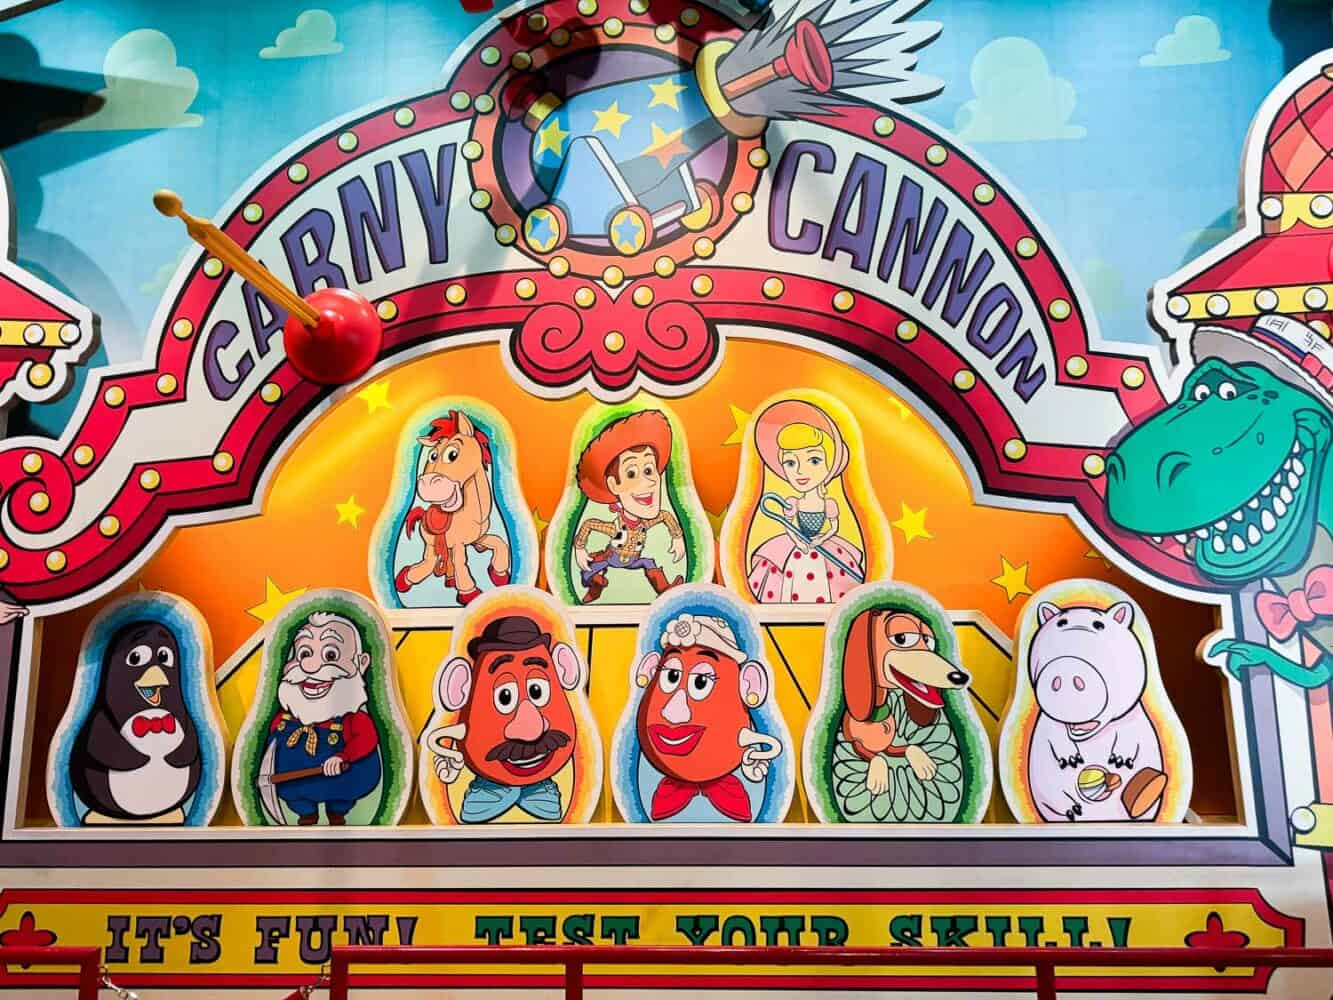 Toy Story Mania ride at Tokyo DisneySea